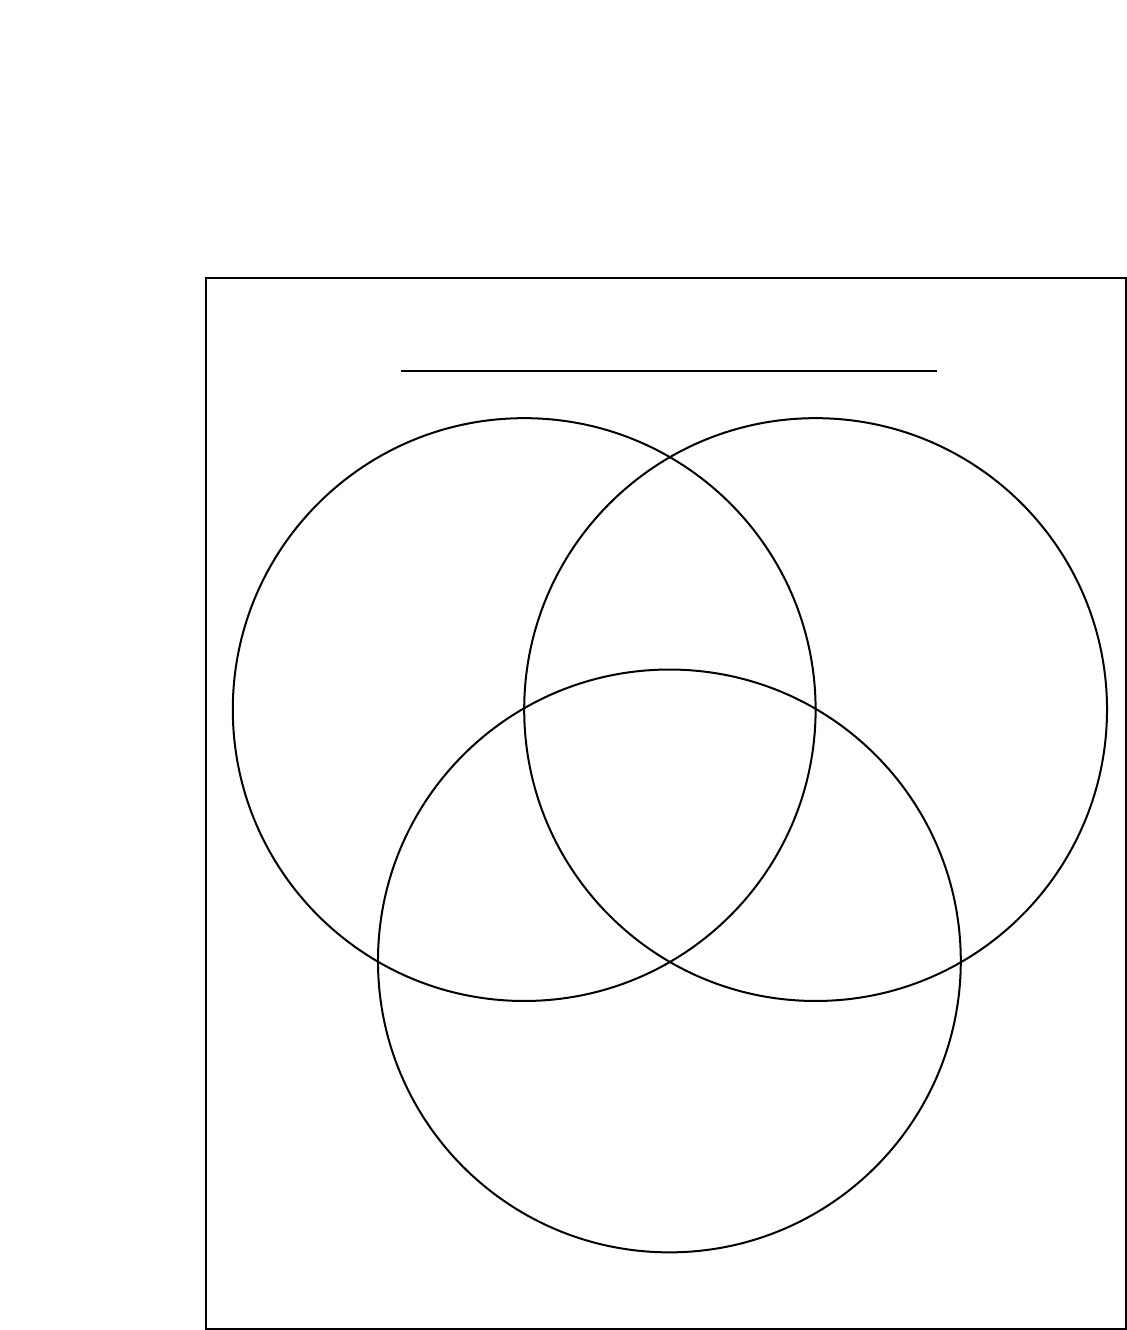 Triple Venn Diagram Template